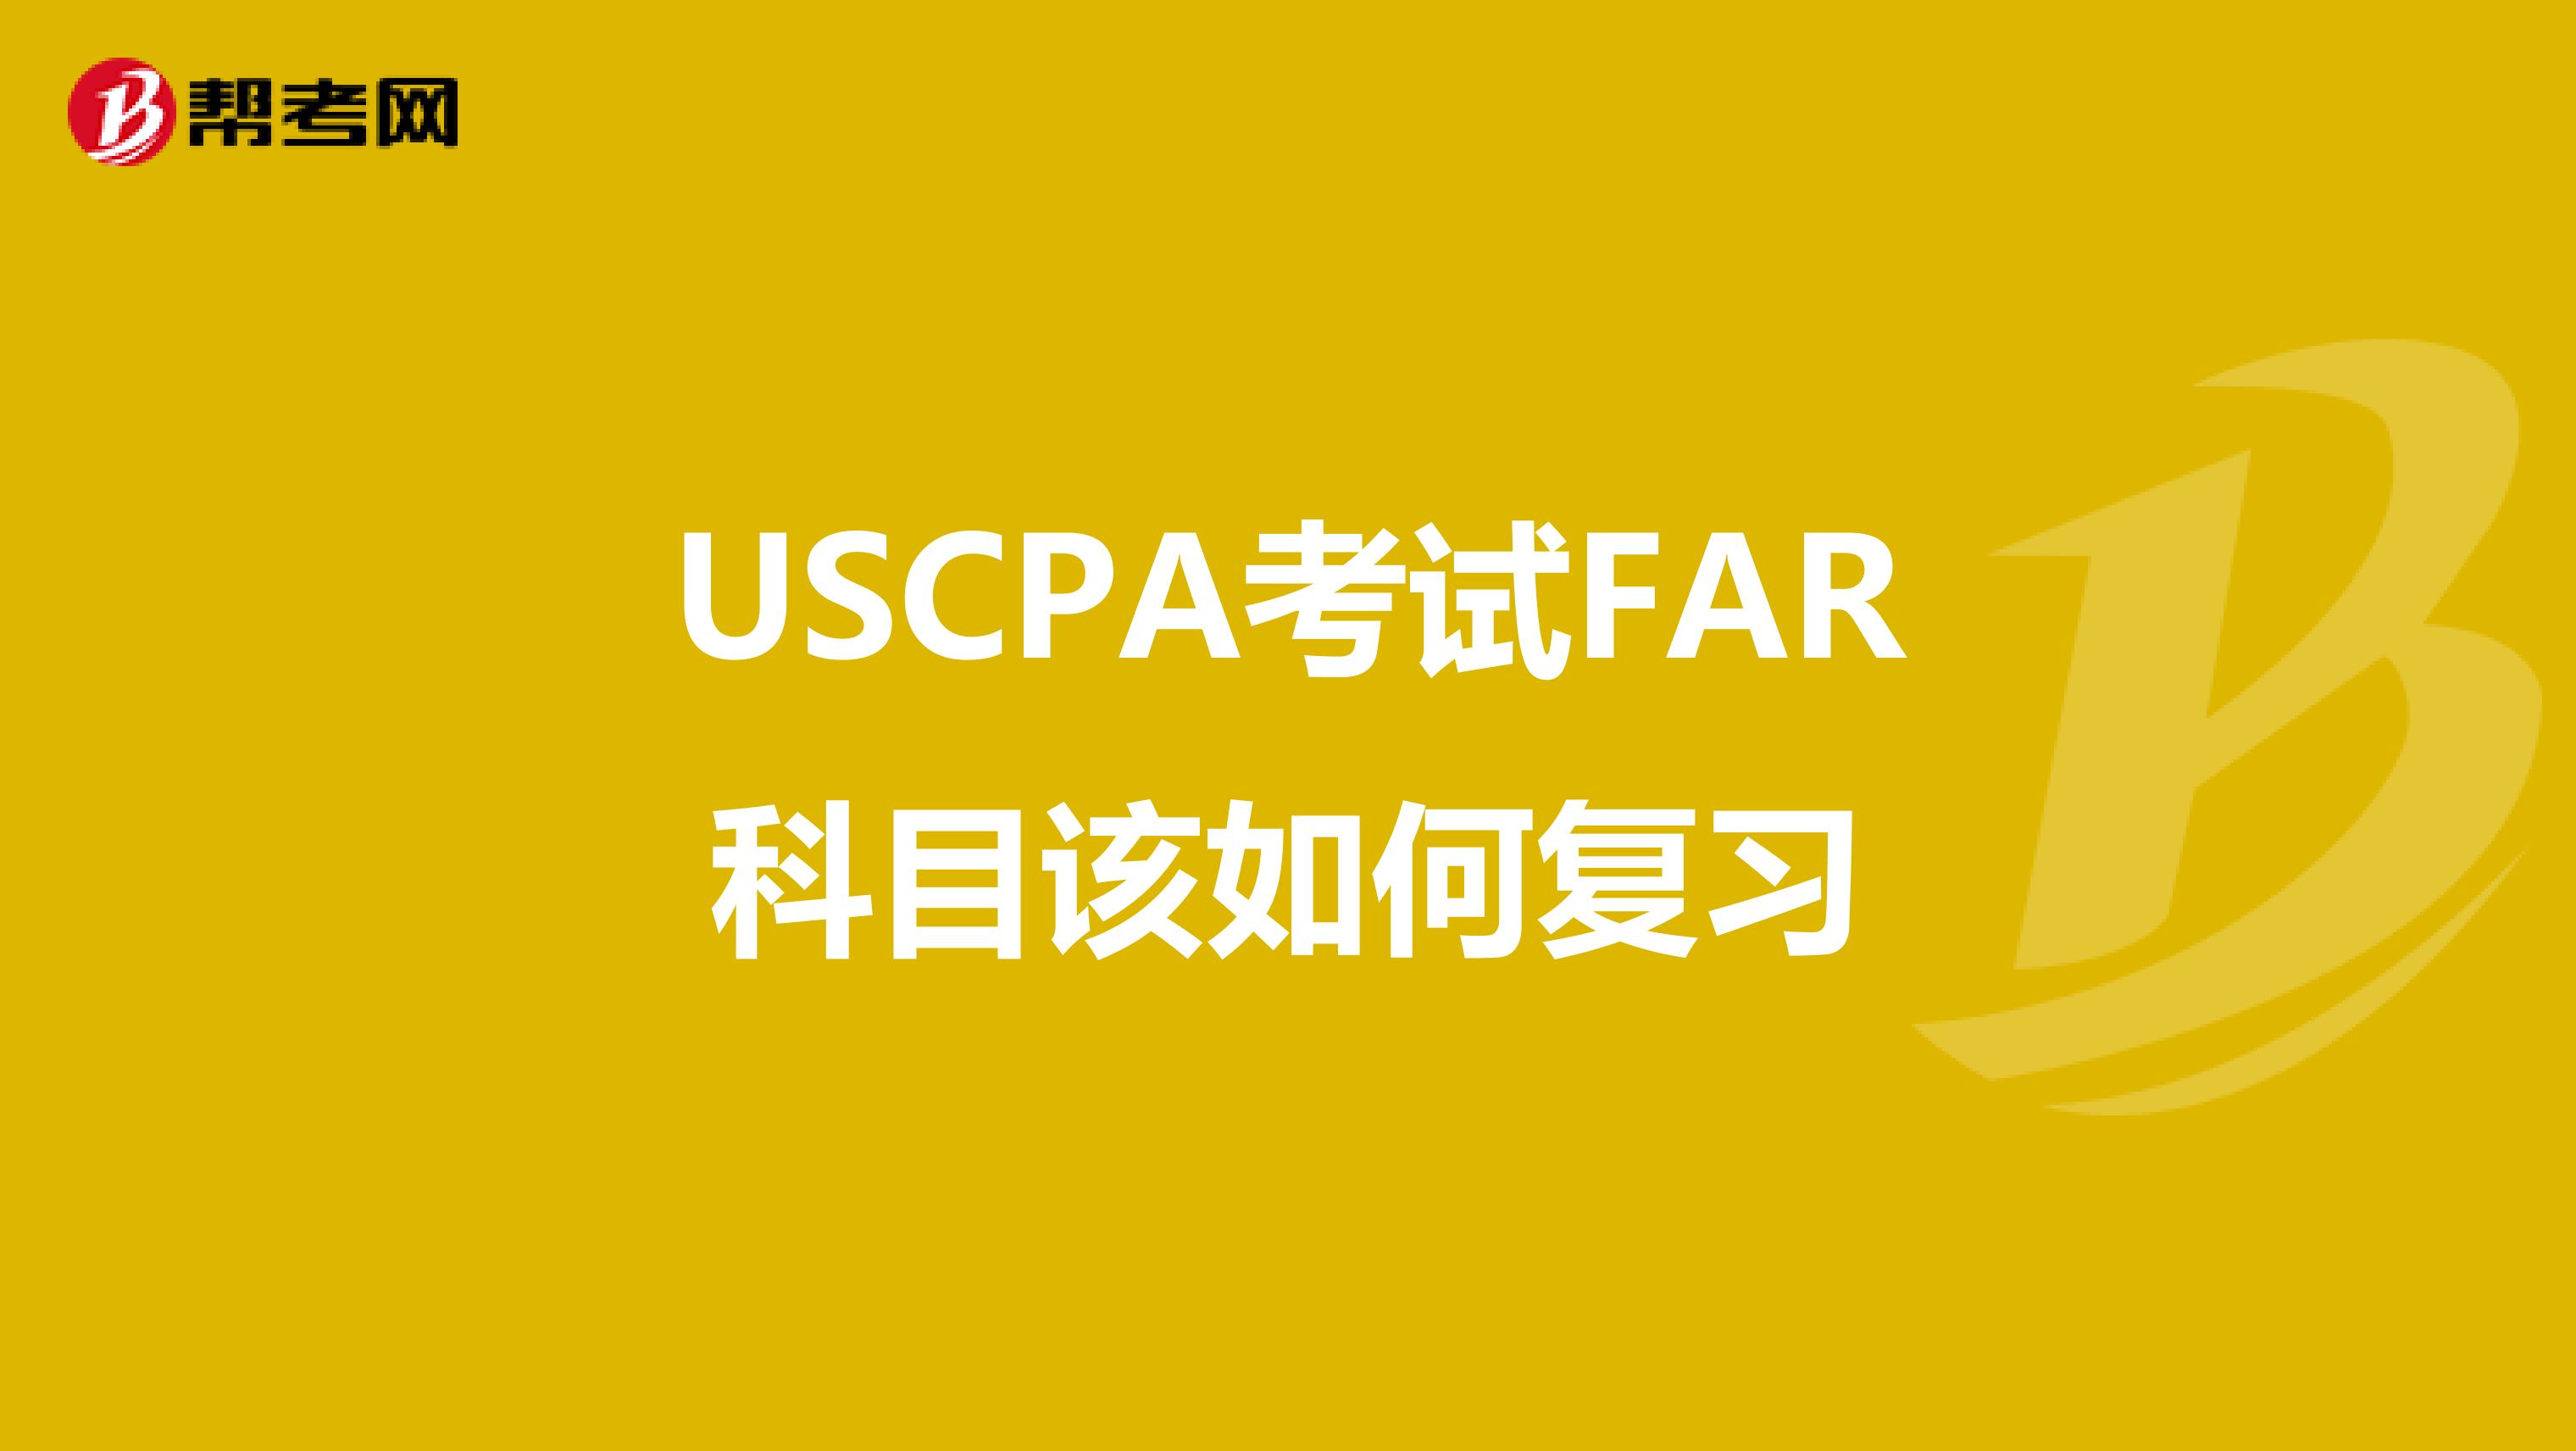 USCPA考试FAR科目该如何复习